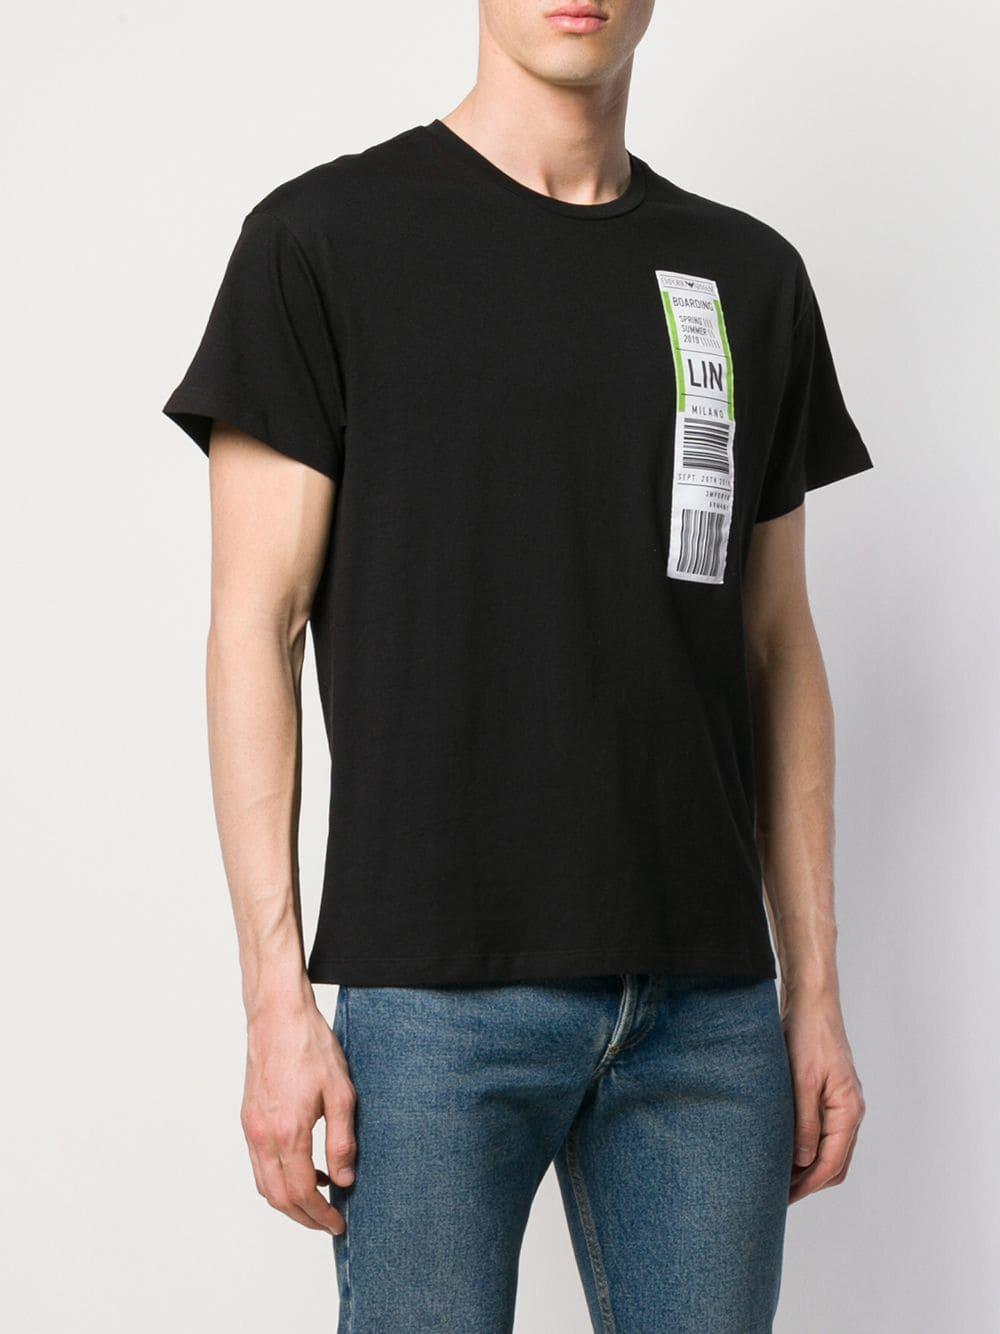 Emporio Armani Cotton Boarding Pass T-shirt in Black for Men - Lyst